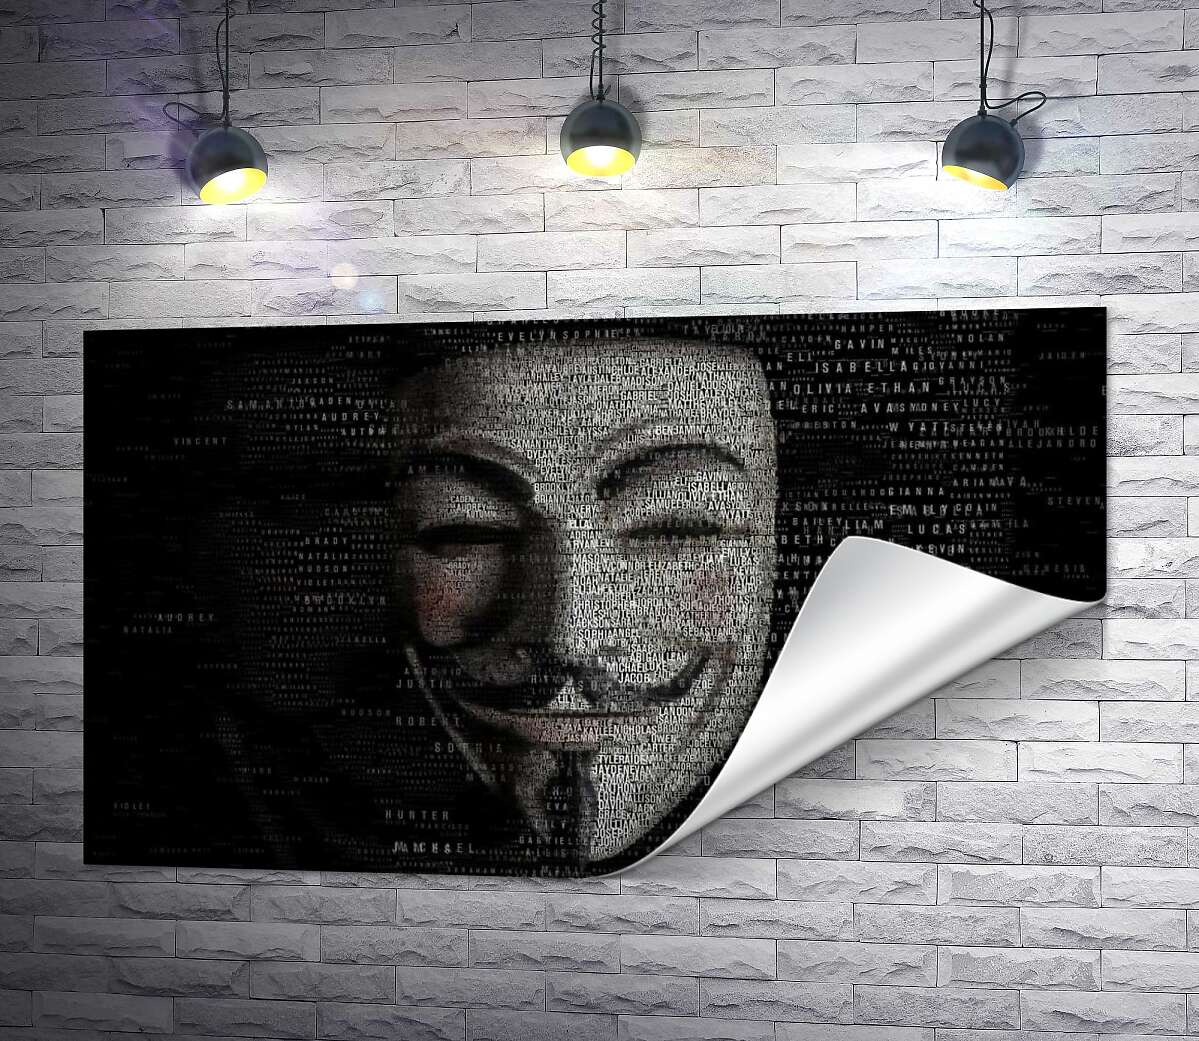 друк Зловісна маска на постері до фільму "Ім'я нам легіон" (We Are Legion: The Story of the Hacktivists)